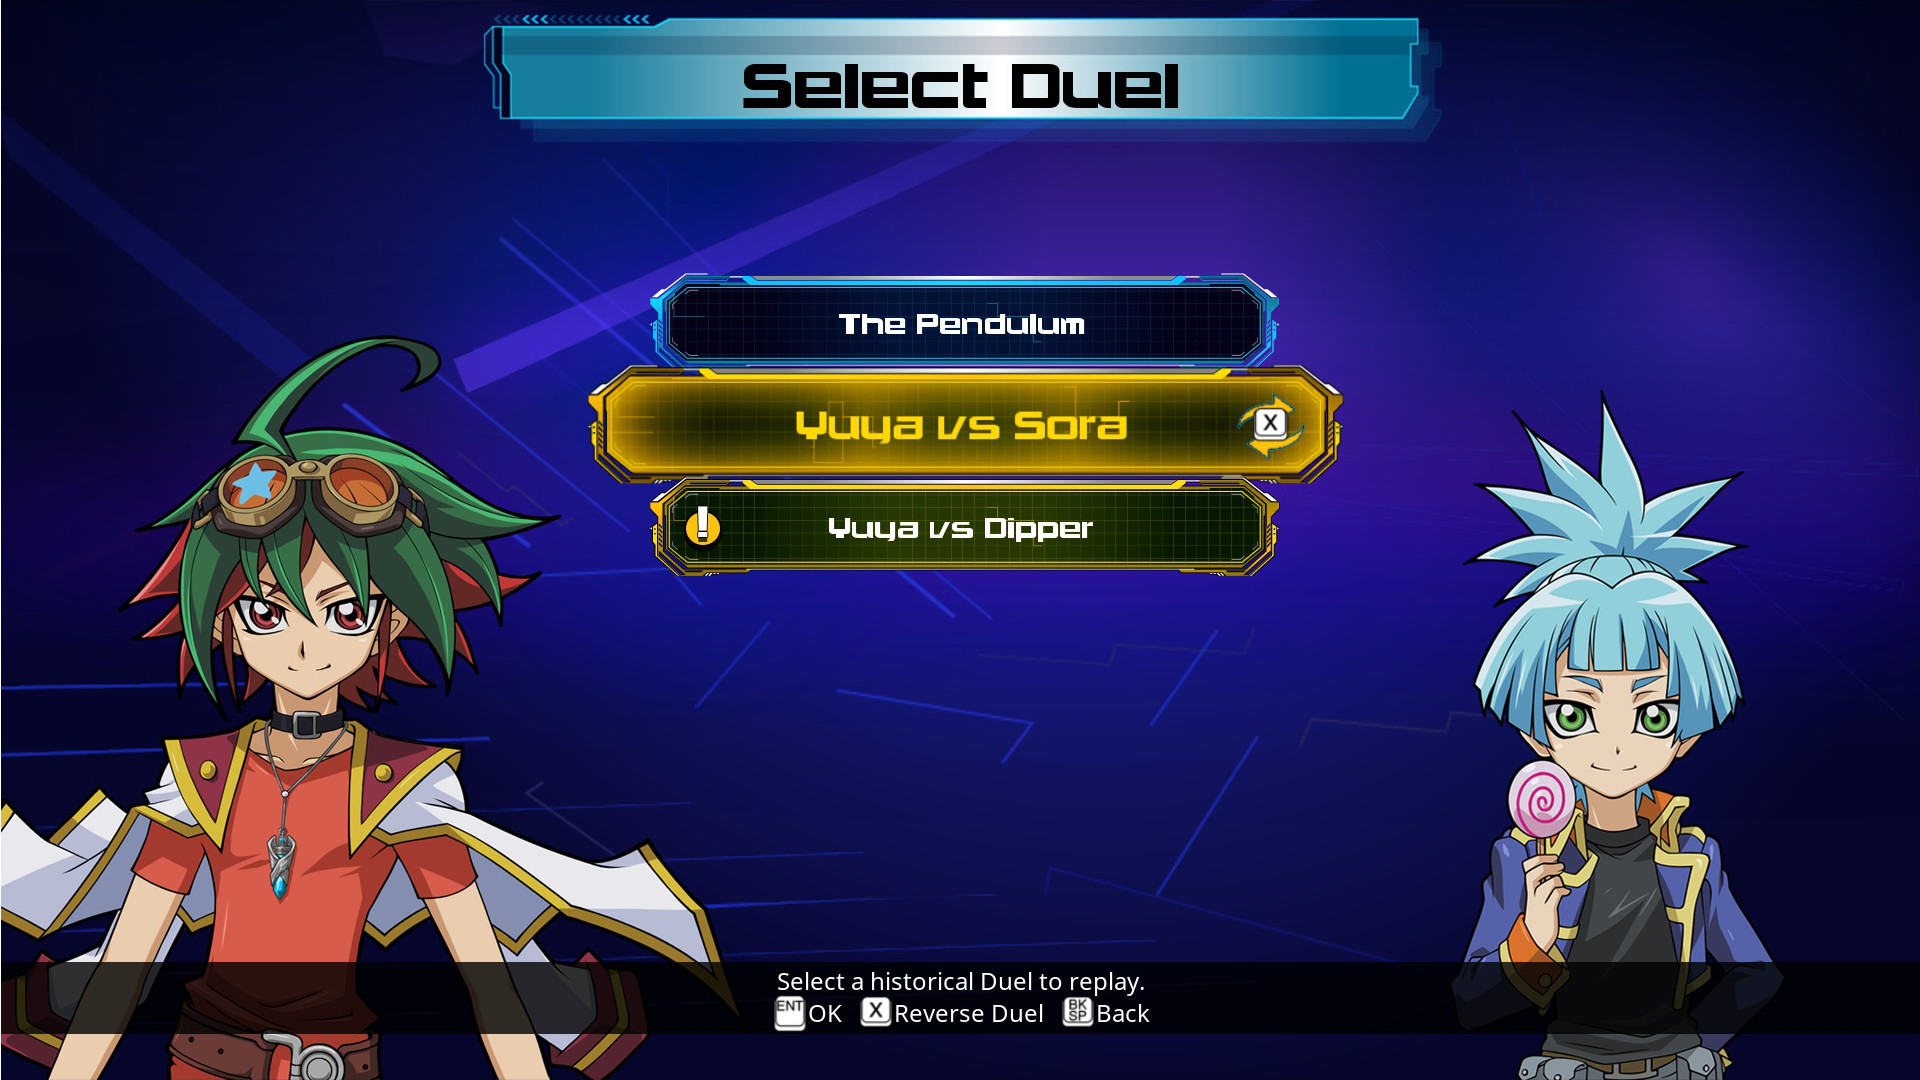 Yu-Gi-Oh! Legacy of the Duelist - ARC-V: Sora and Dipper DLC Steam CD Key 1.31 usd